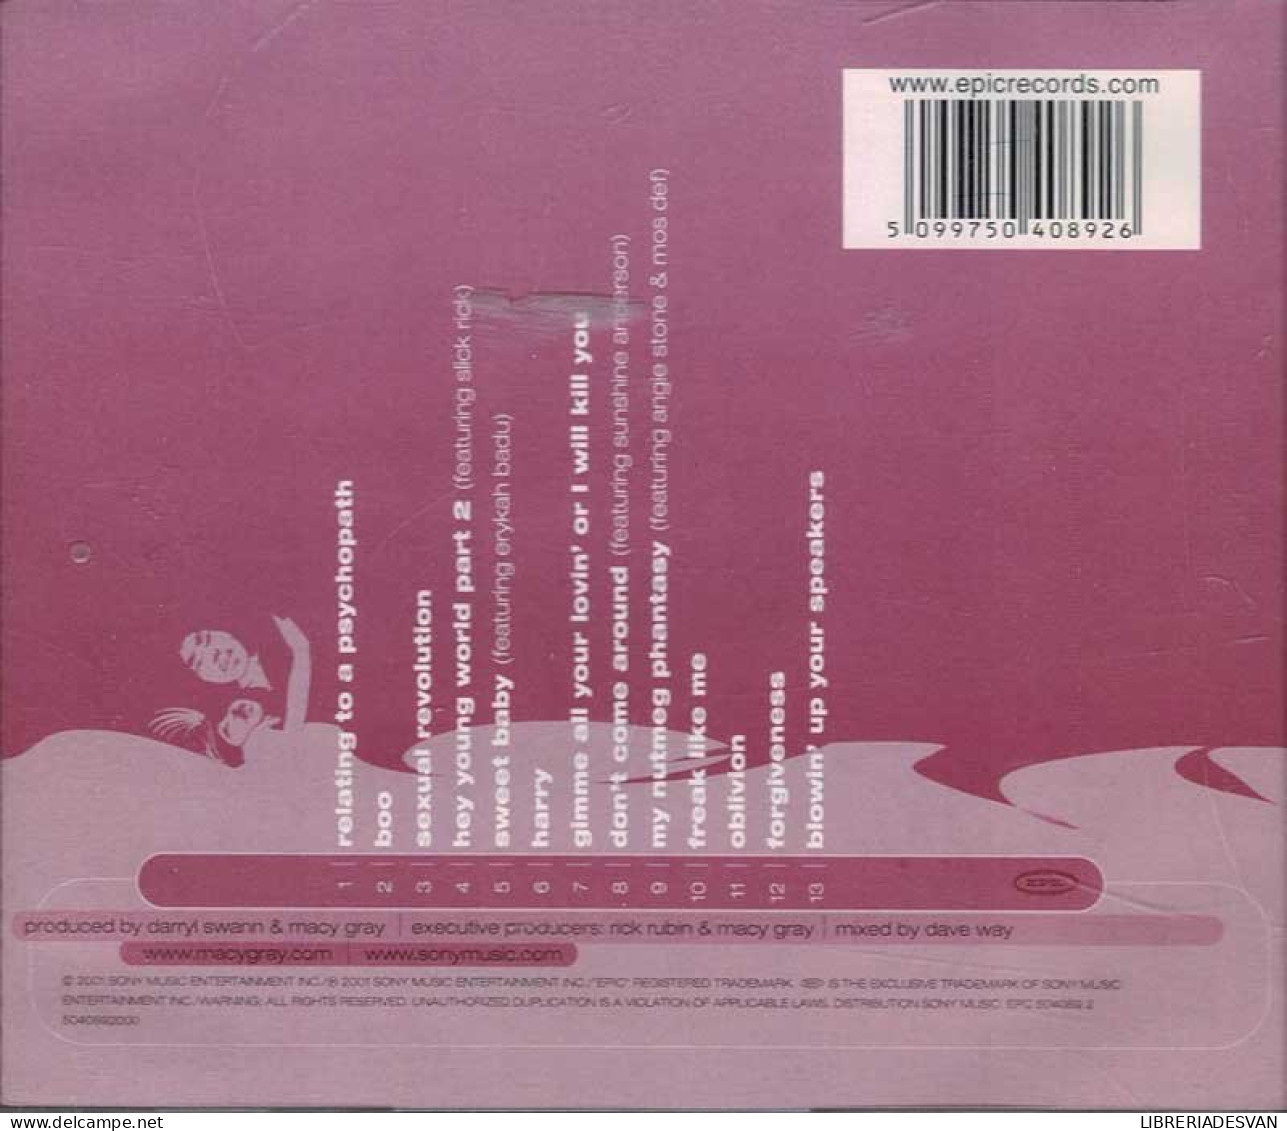 Macy Gray - The Id. CD